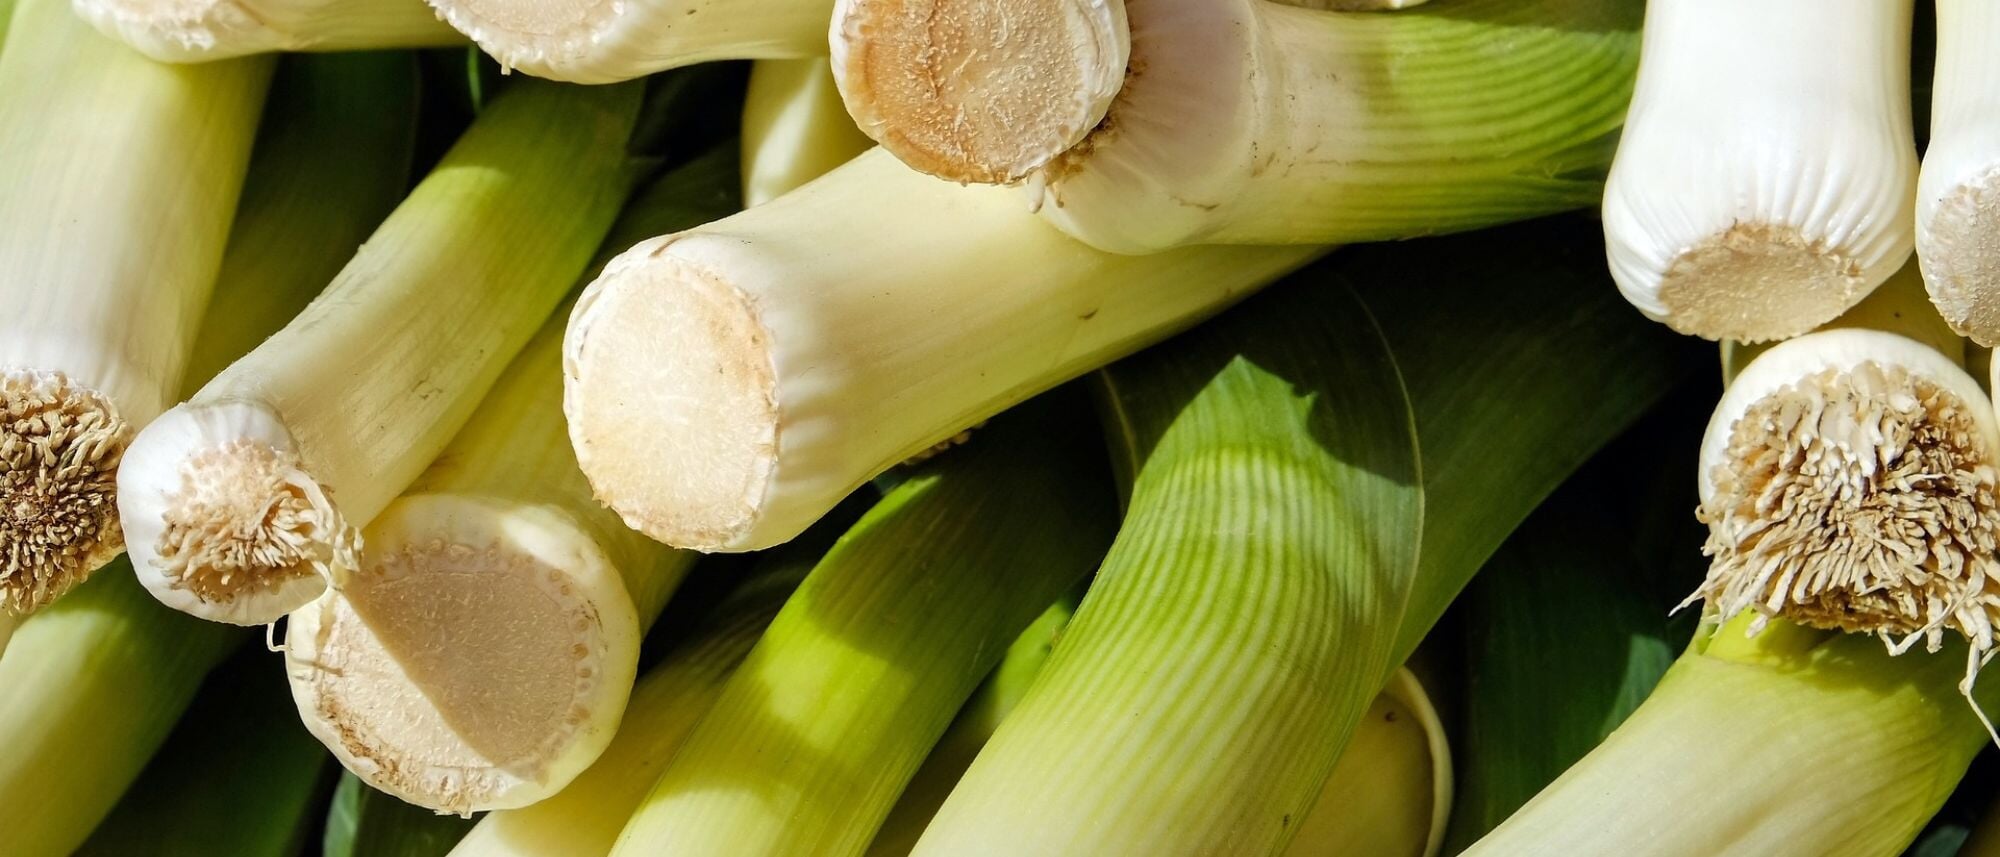 Grow leeks for a fresh onion taste in your garden